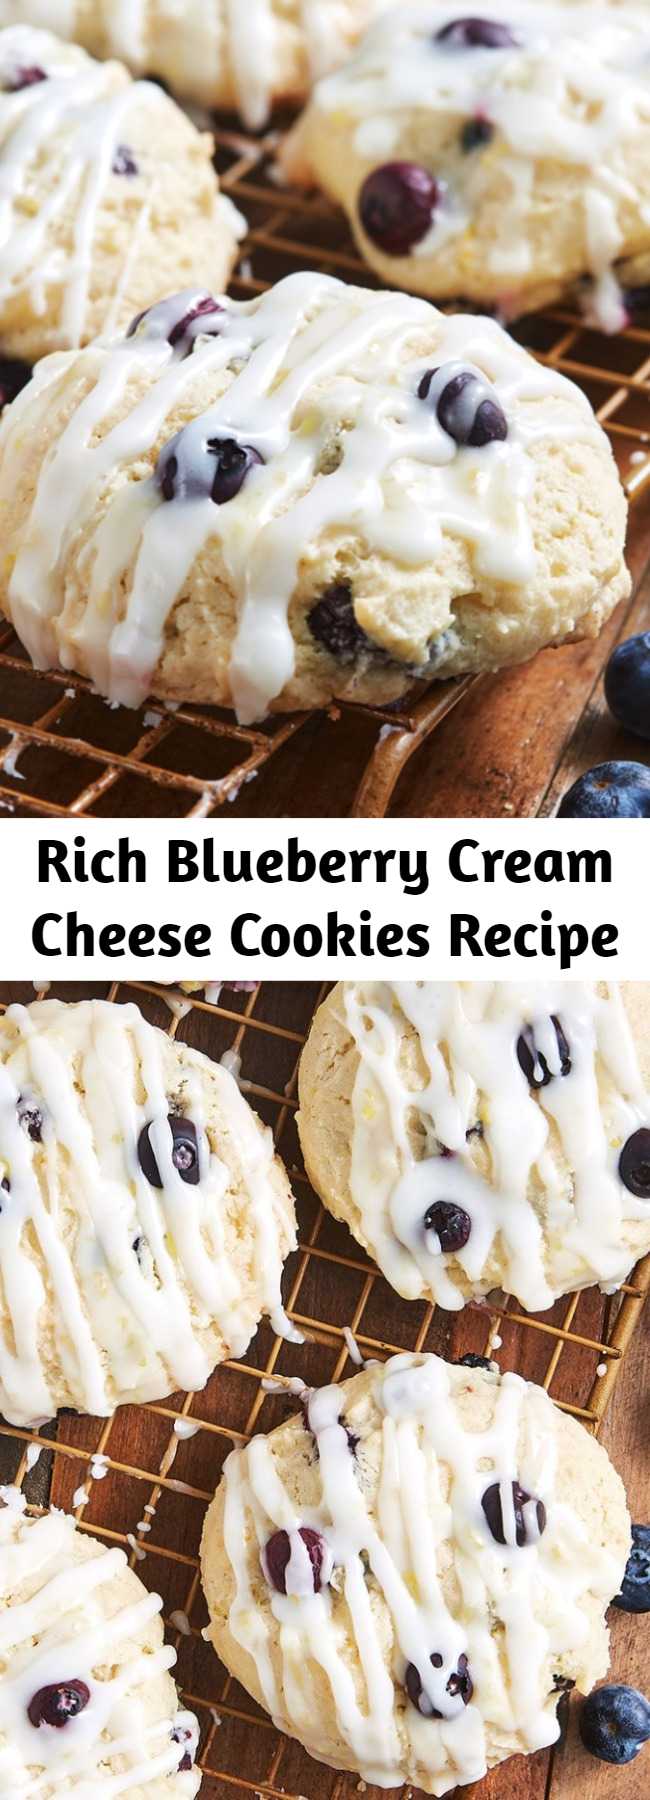 Rich Blueberry Cream Cheese Cookies Recipe